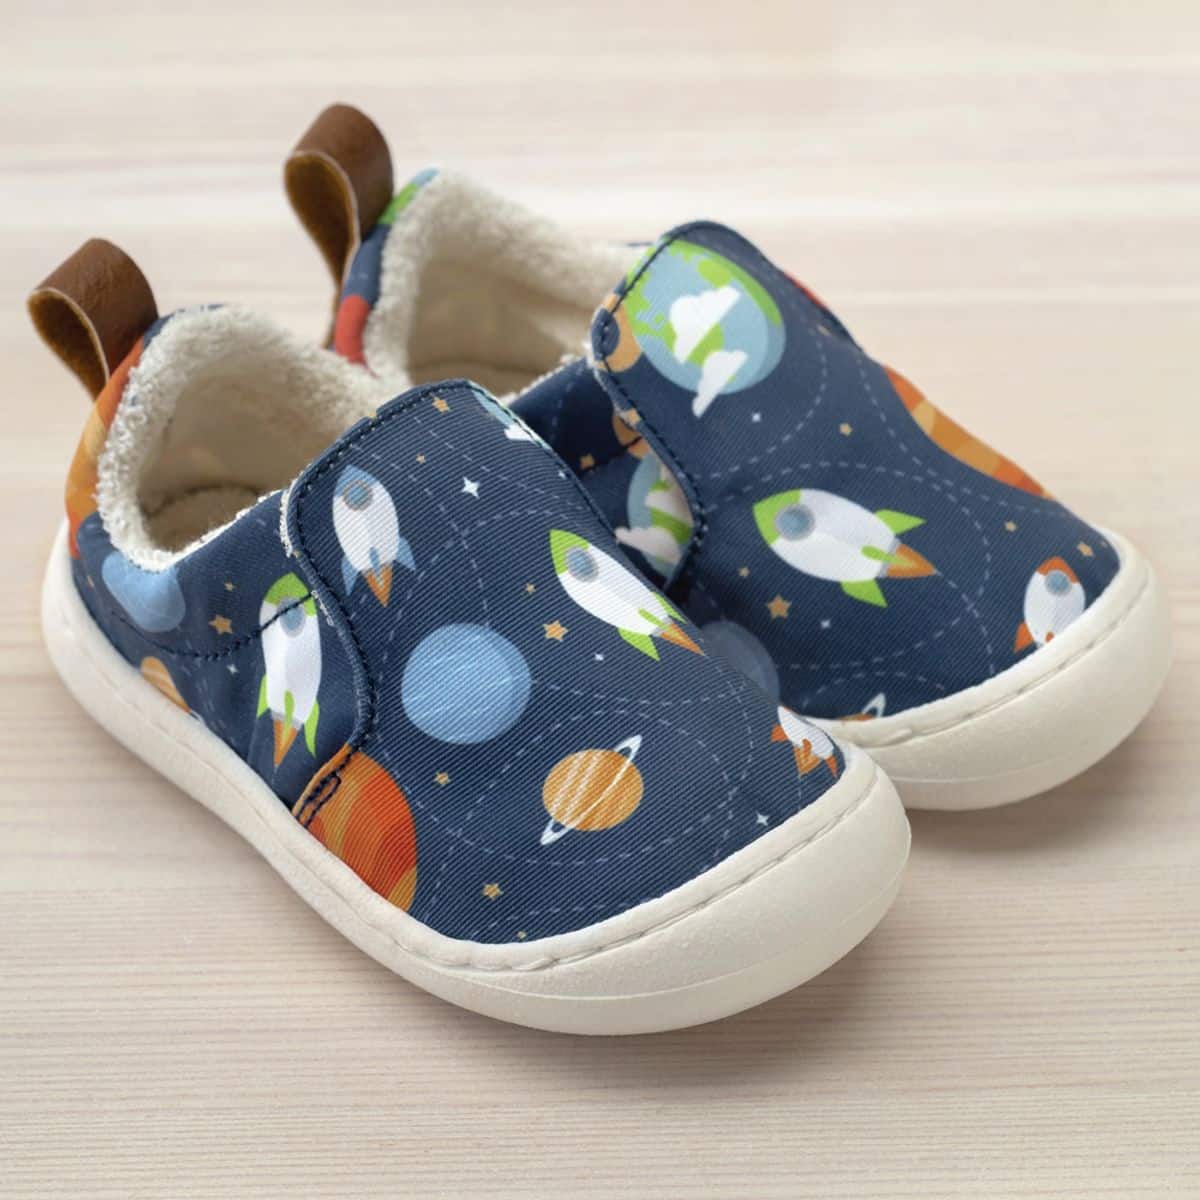 Seaqual | POLOLO Yarn 20-27 Planeten Kinder-Sneaker – ökologische Kinderschuhe Chico